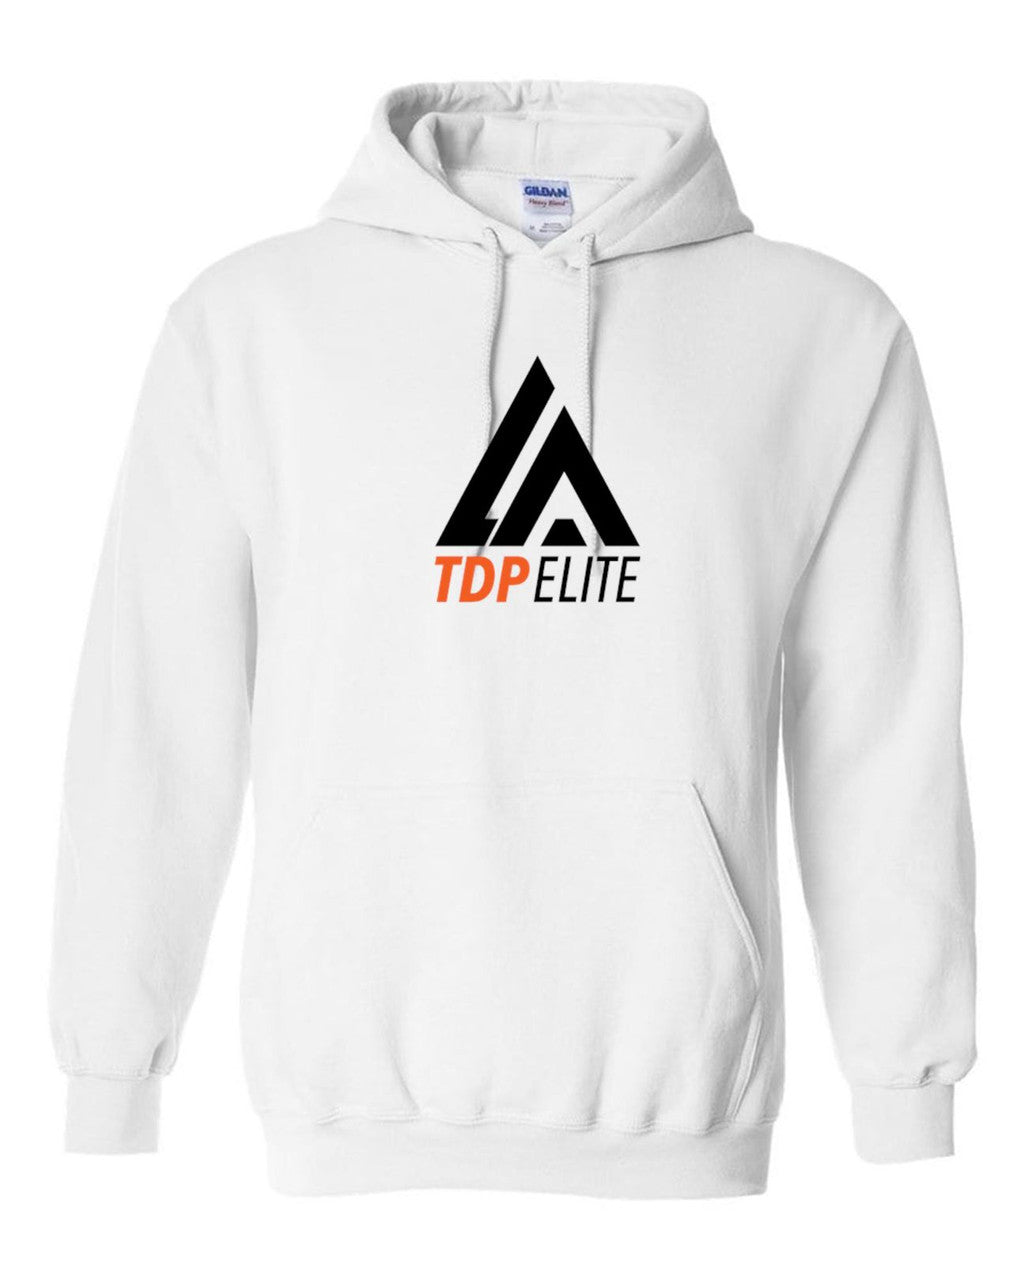 LATDP Elite Hooded Sweatshirt LATDP Spiritwear WHITE YOUTH SMALL - Third Coast Soccer